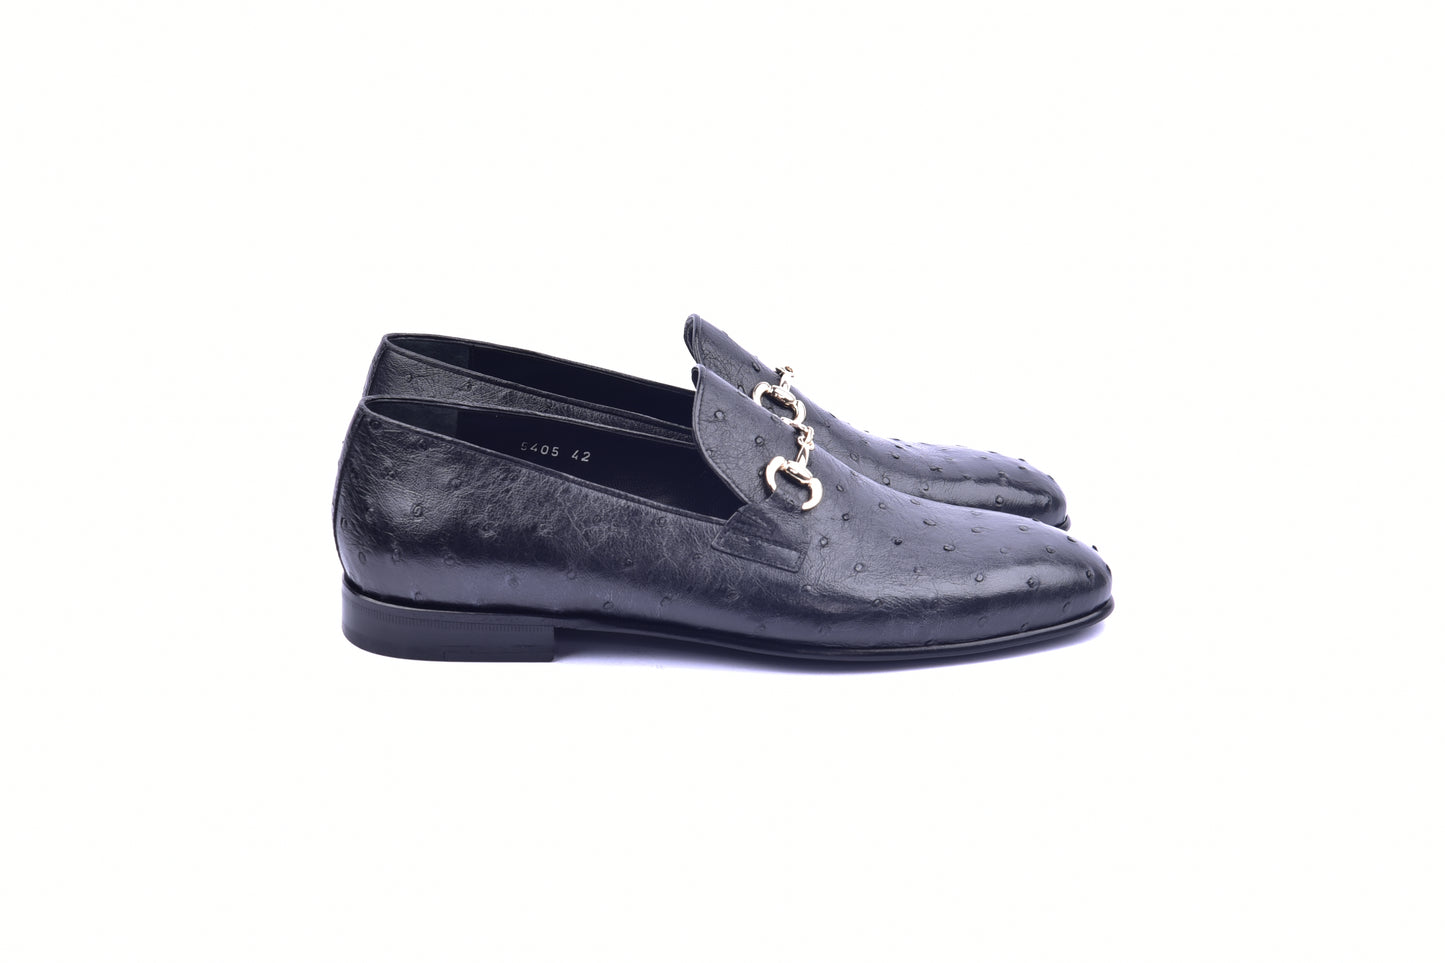 C02201-5405 Genuine Ostrich buckle loafer- Black